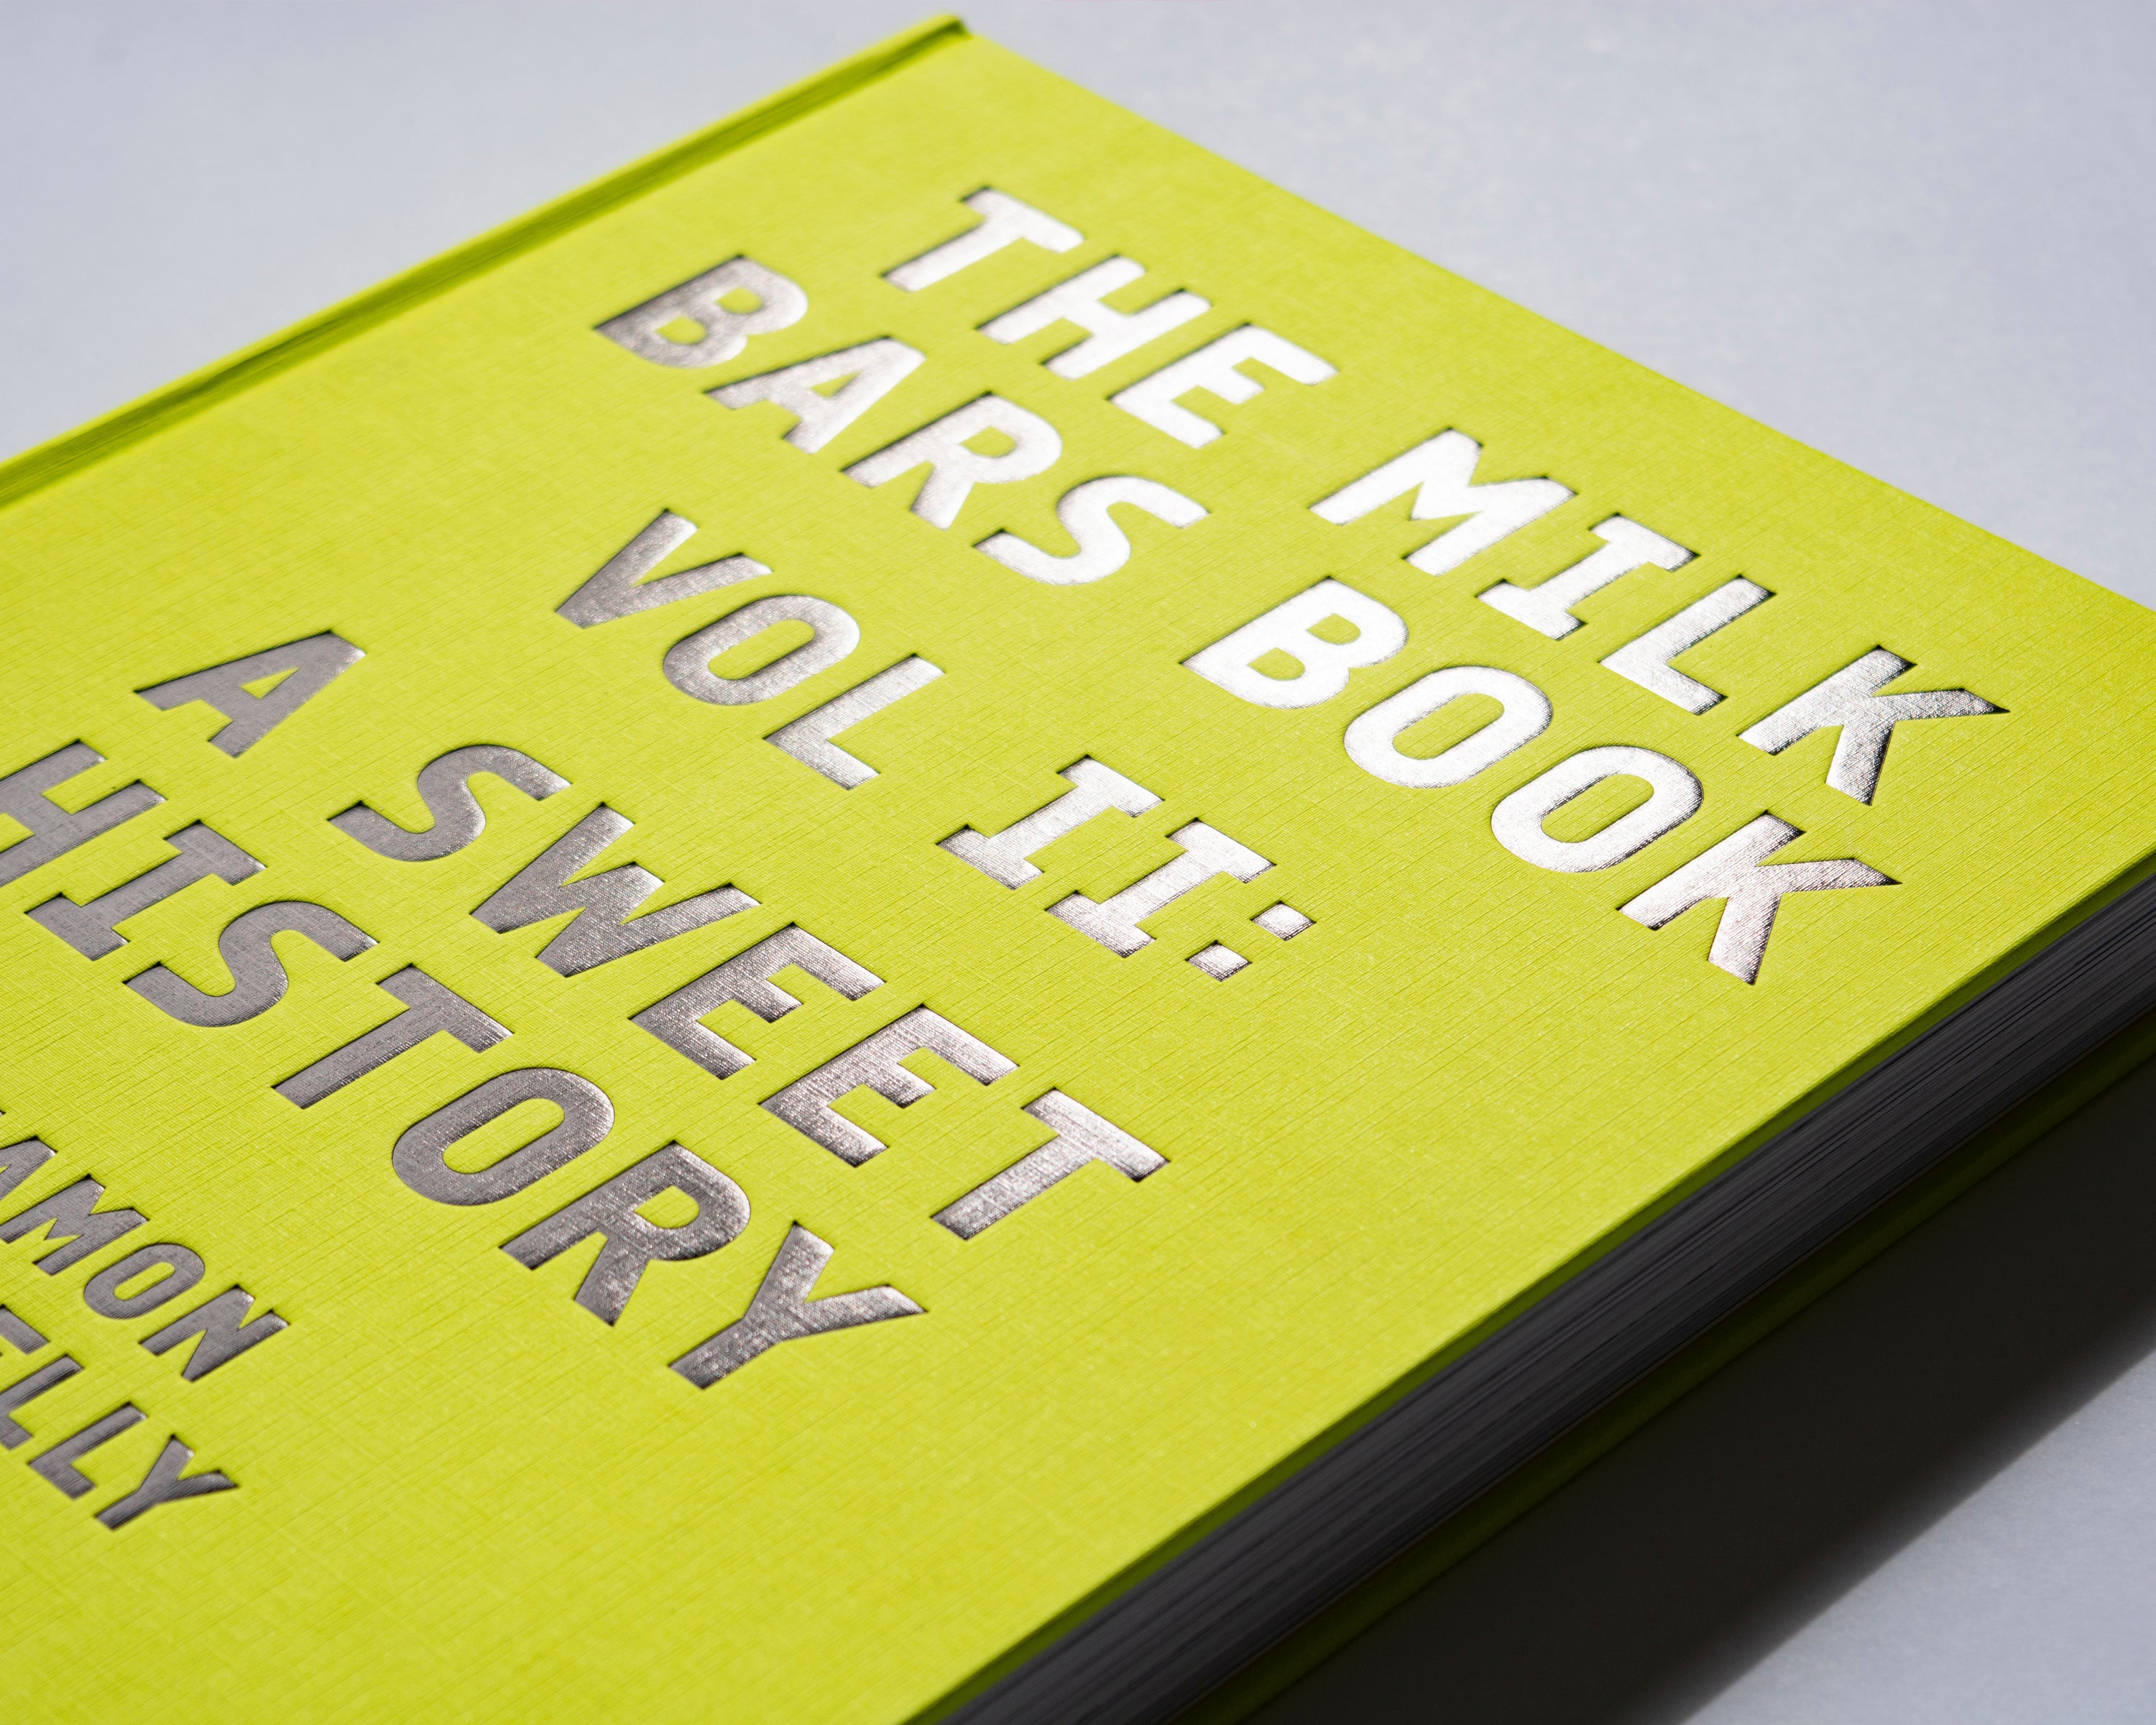 The Milk Bars Book. Volume II: A Sweet History [Lemon Sherbet Cover Colour]